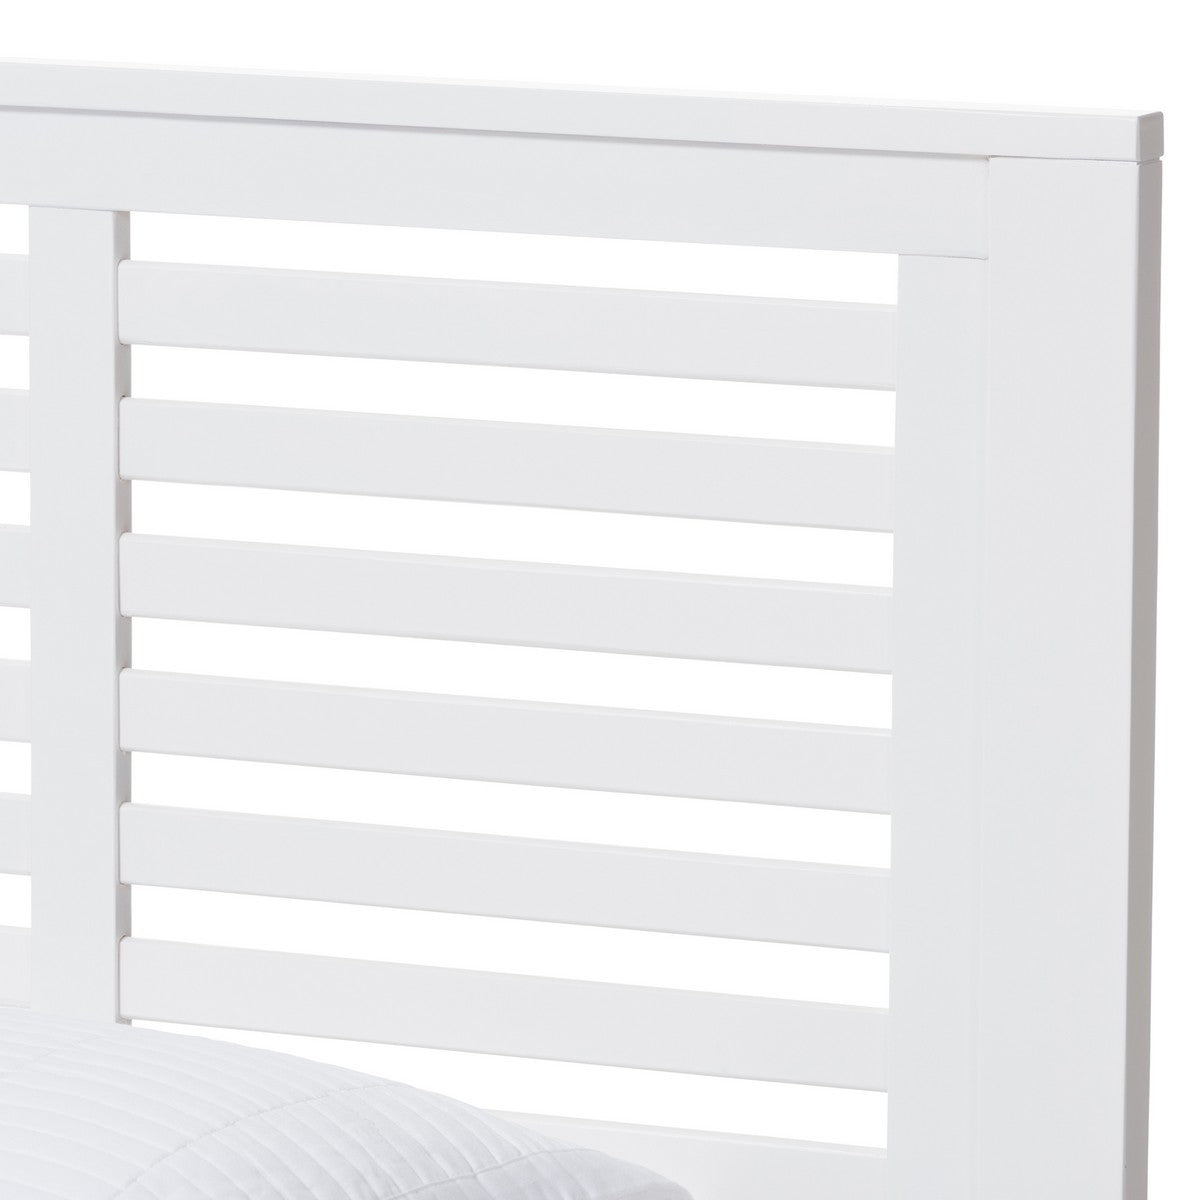 Baxton Studio Sedona Modern Classic Mission Style White-Finished Wood Twin Platform Bed